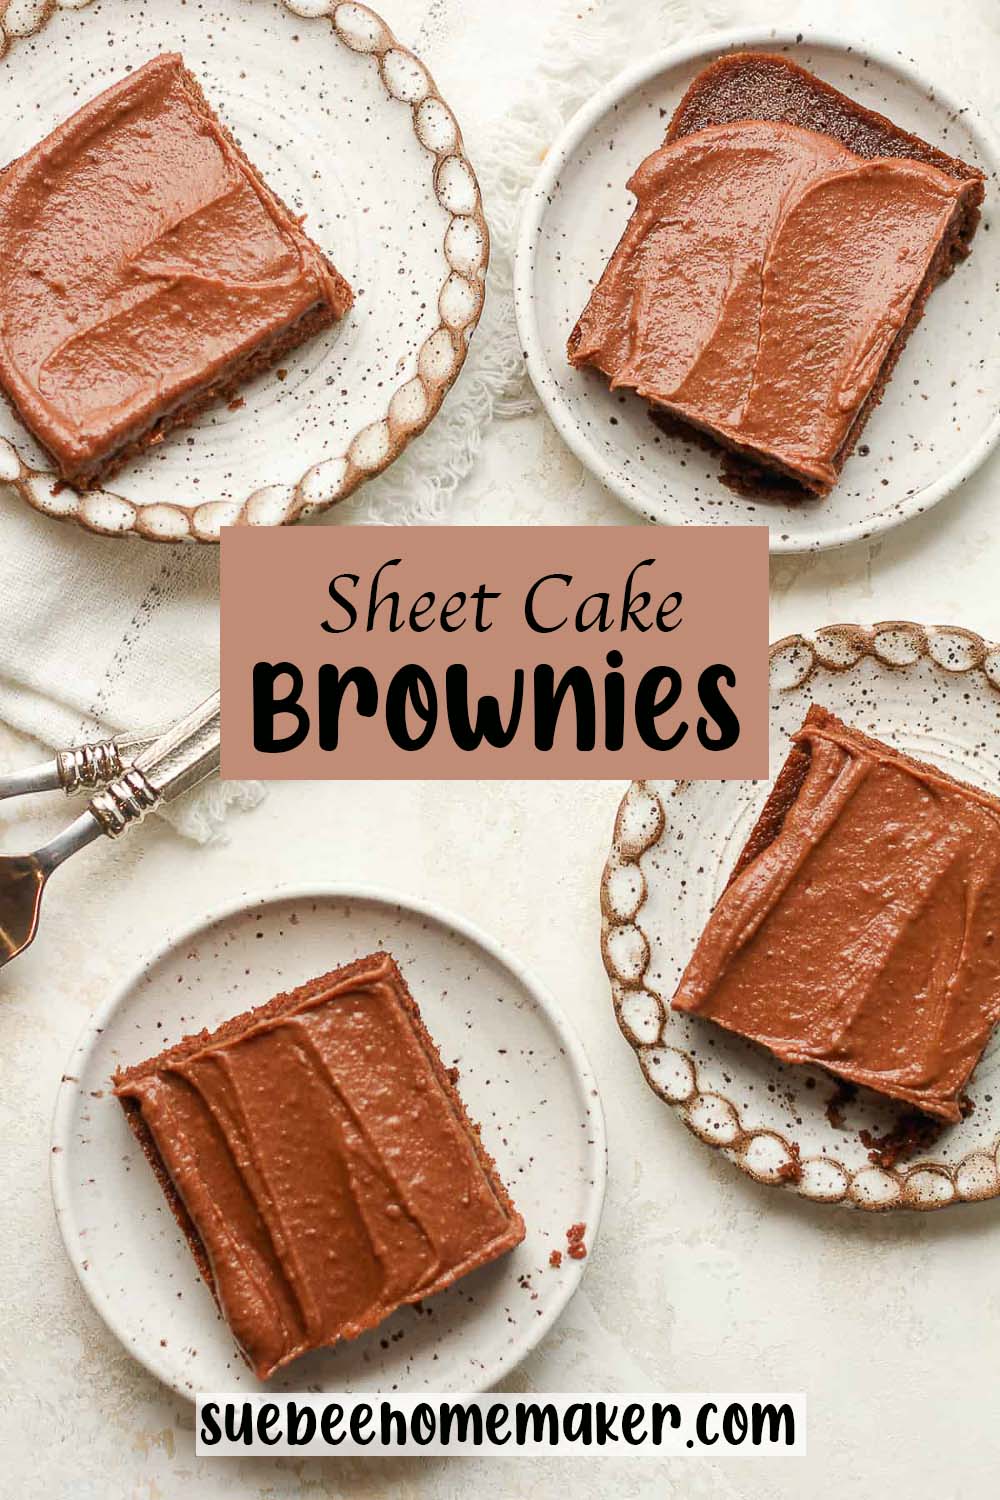 Four pieces of sheet cake brownies.